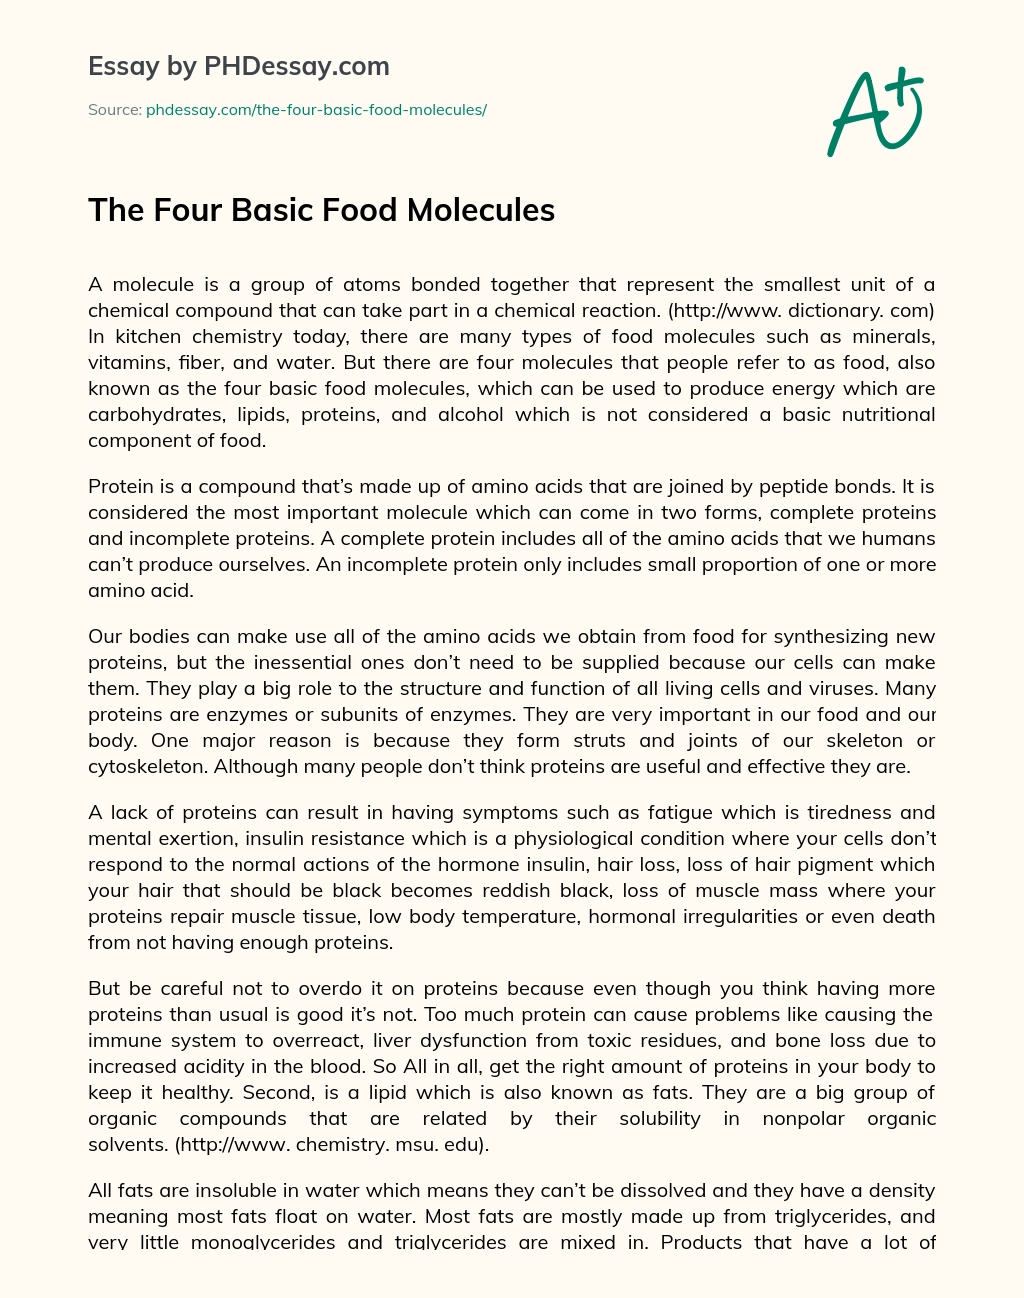 The Four Basic Food Molecules essay